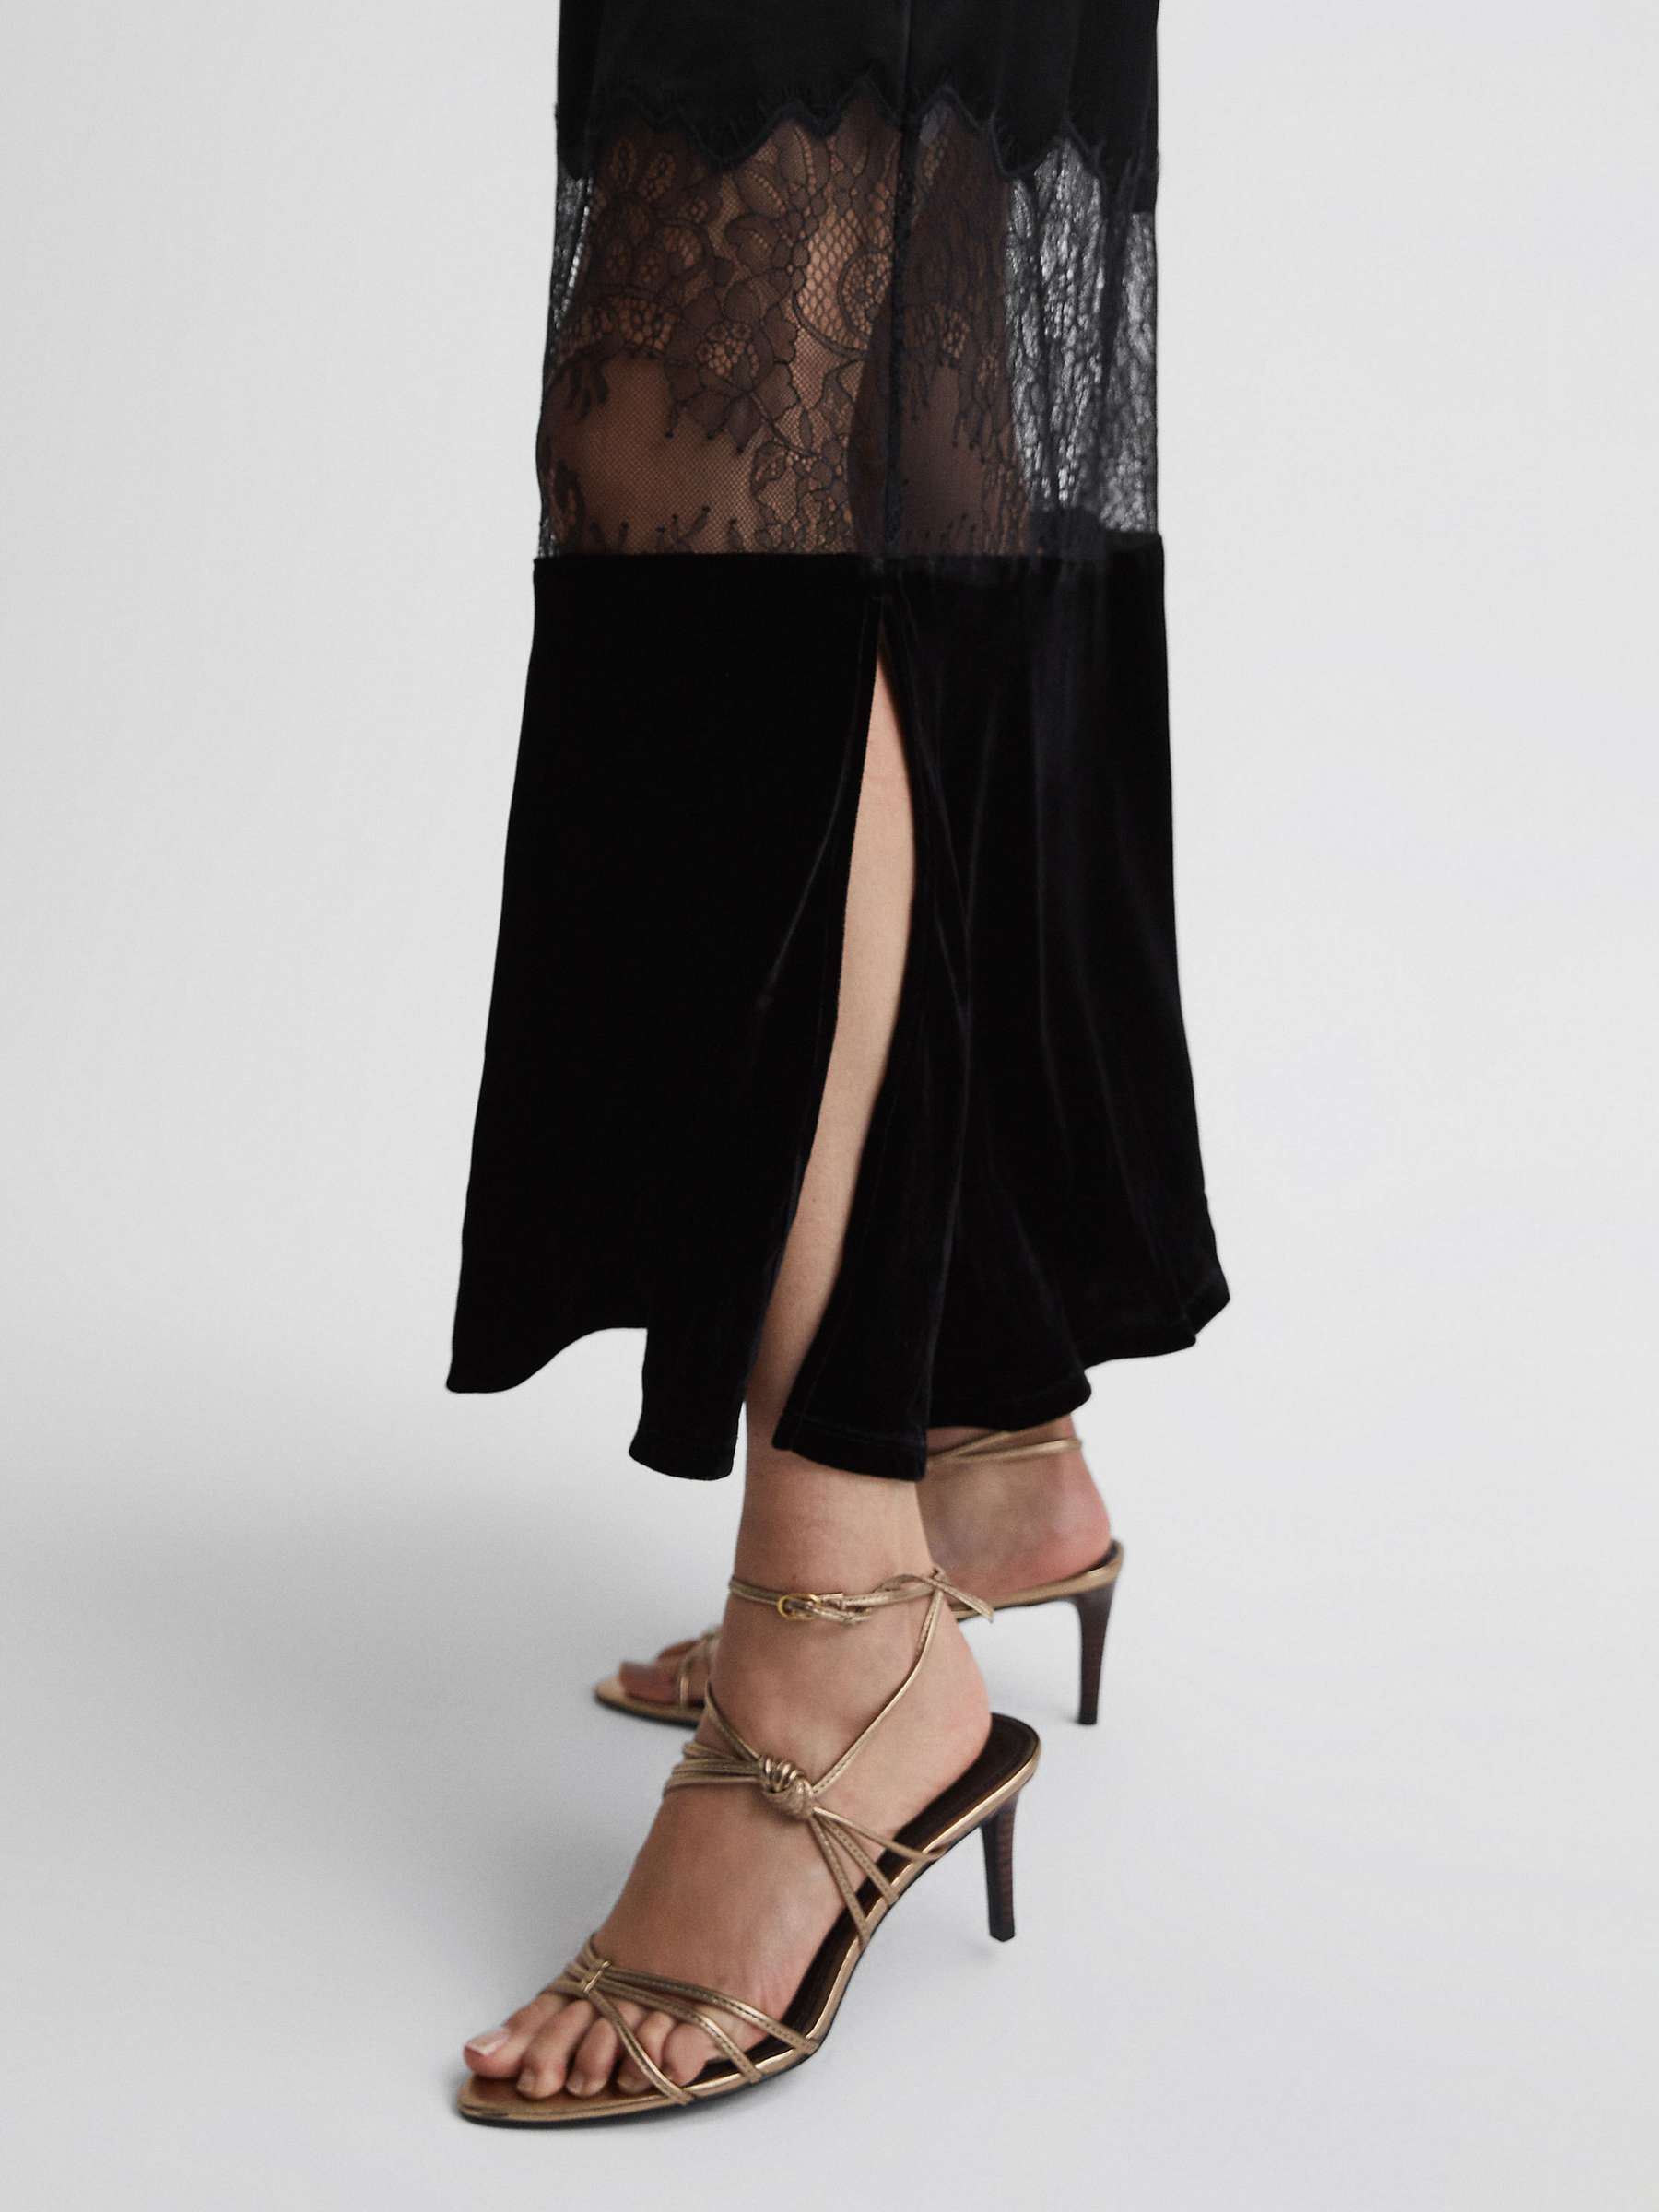 Buy Reiss Janelle Satin Lace Panel Maxi Dress, Black Online at johnlewis.com